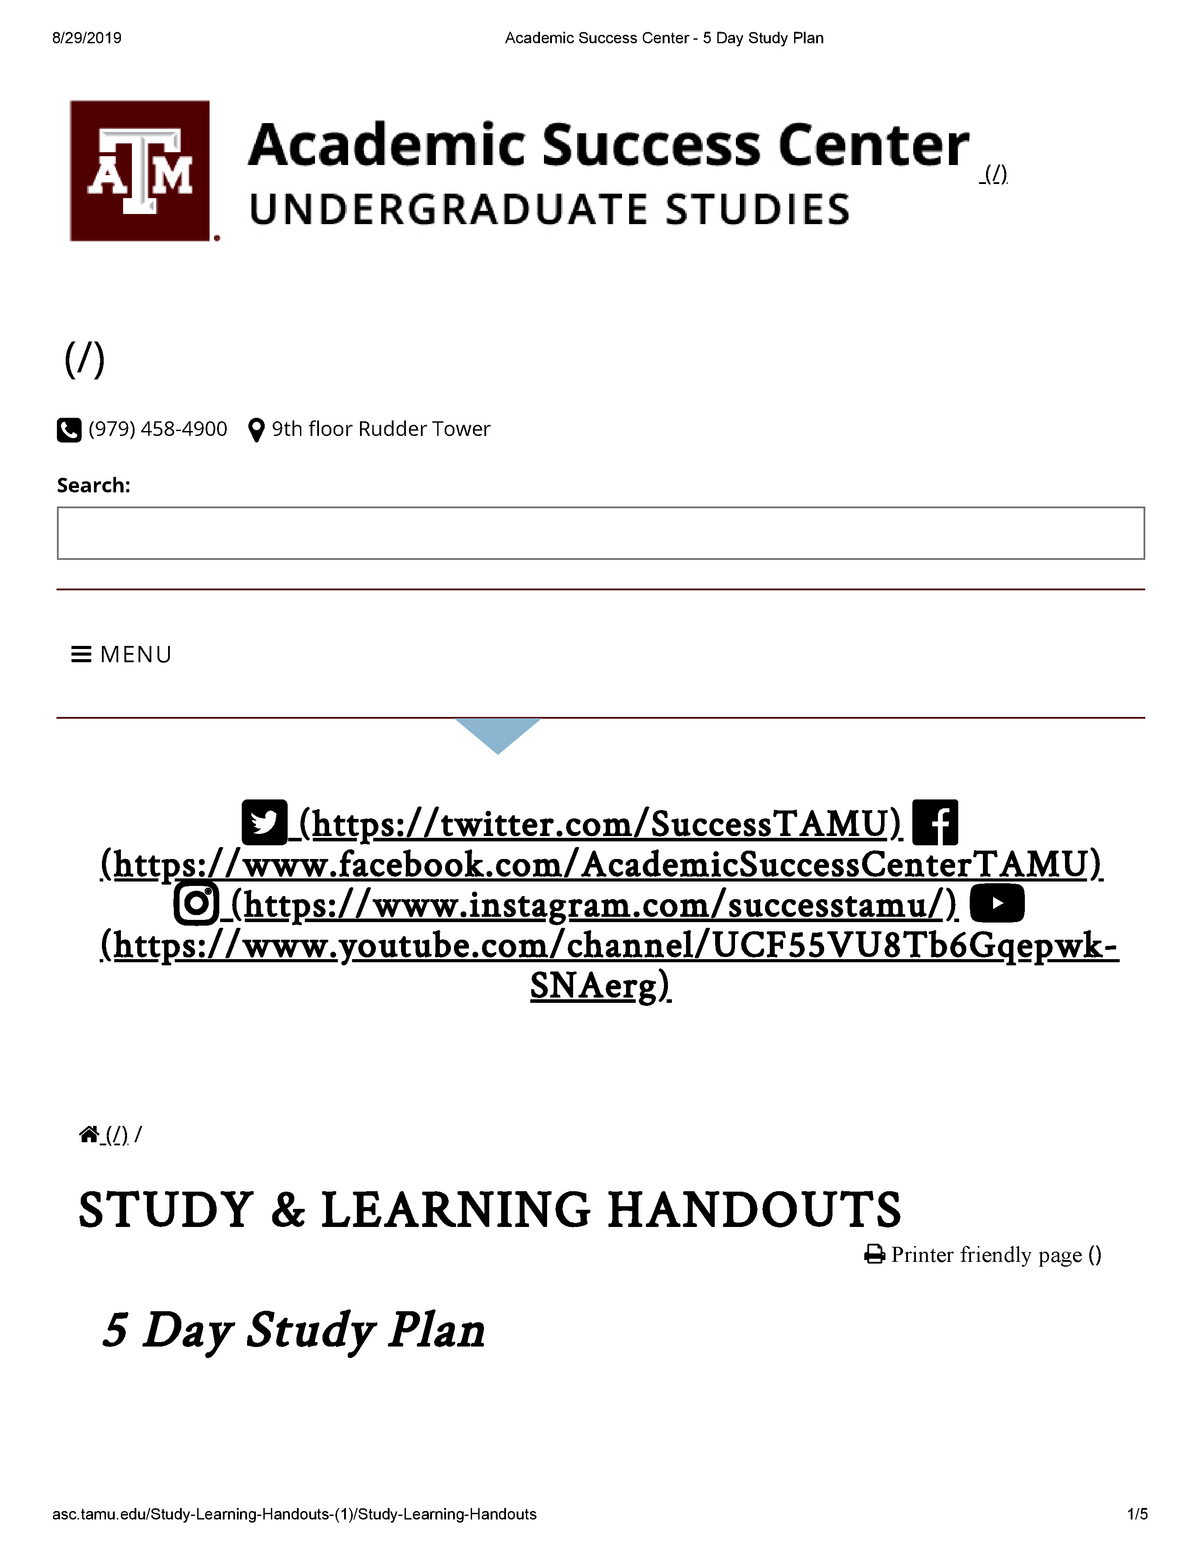 academic-success-center-5-day-study-plan-979-458-4900-9th